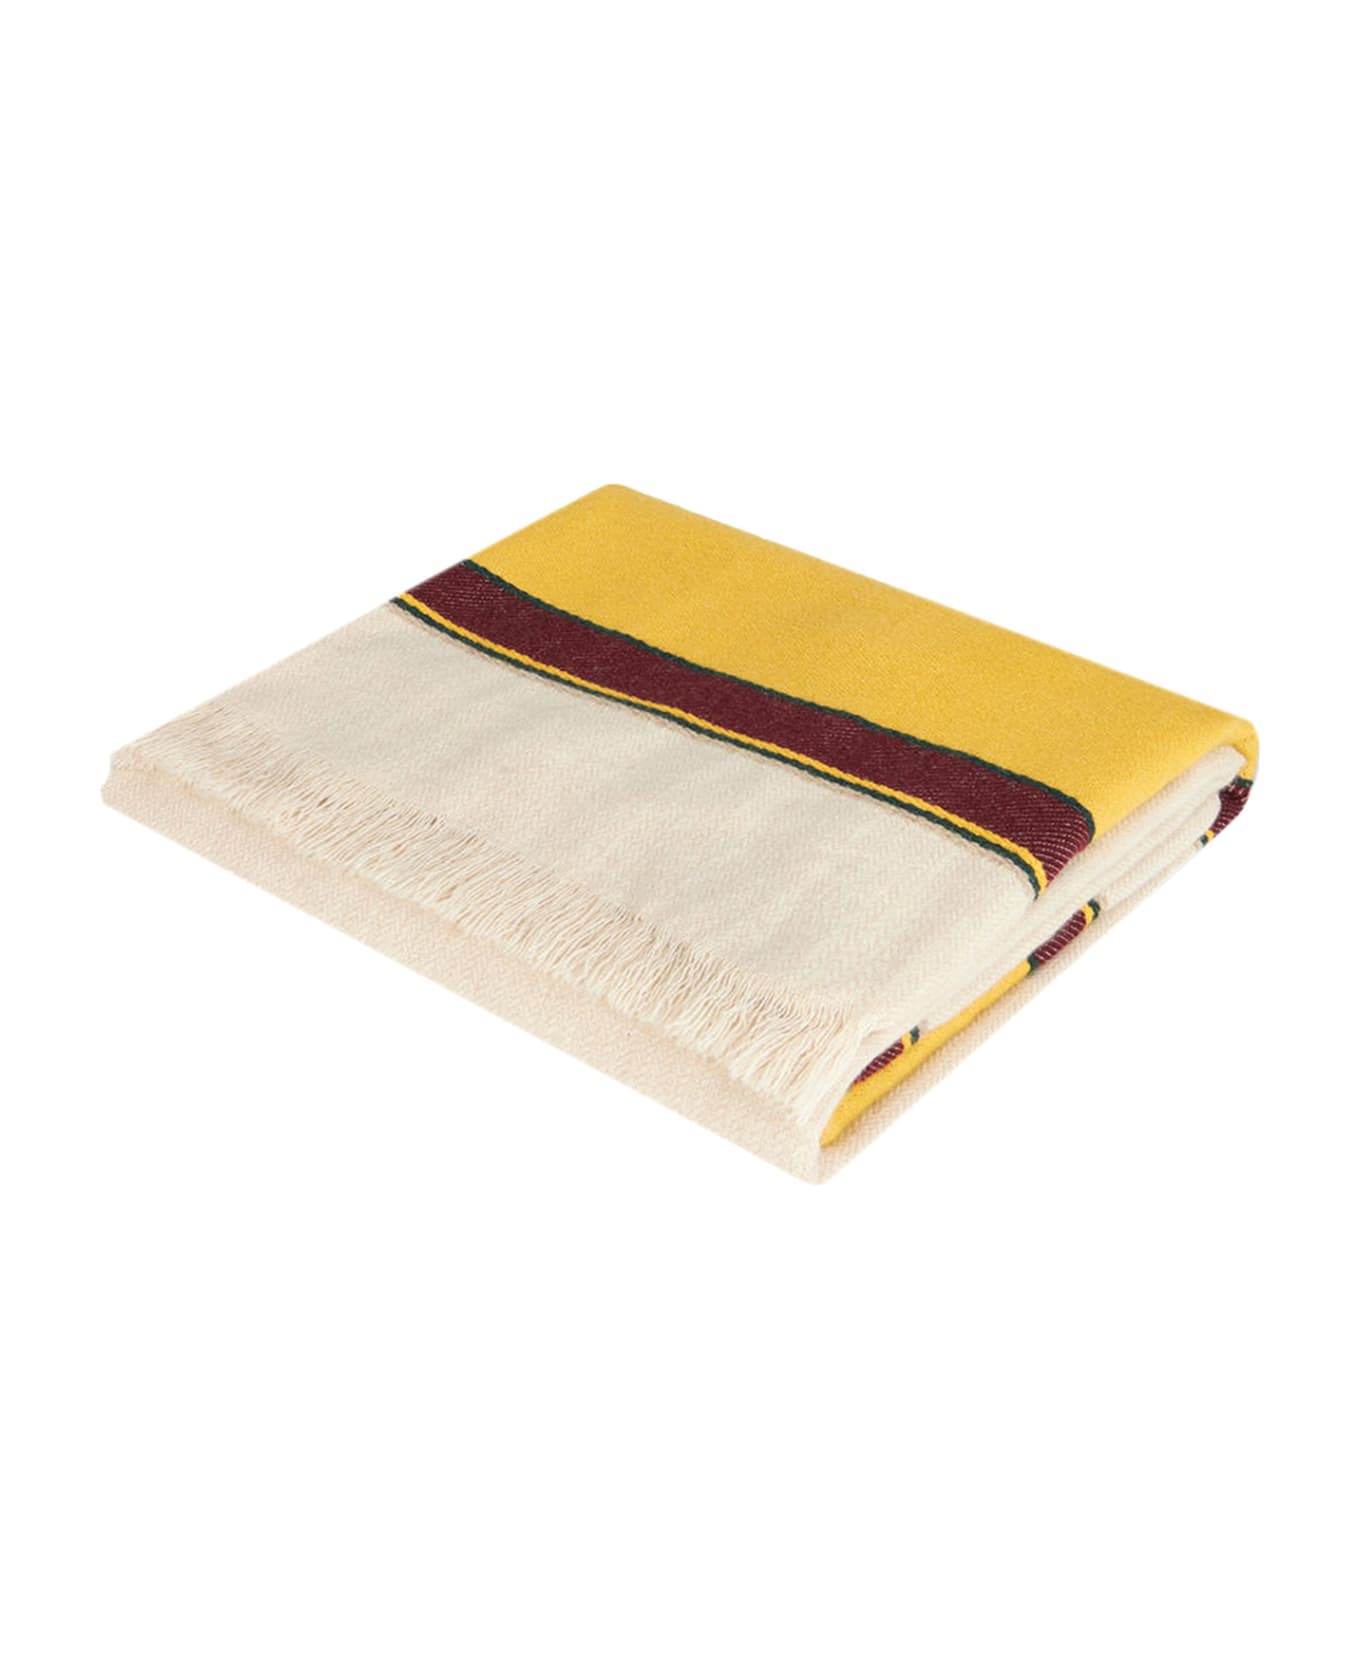 Etro Small Blanket - Beige ブランケット